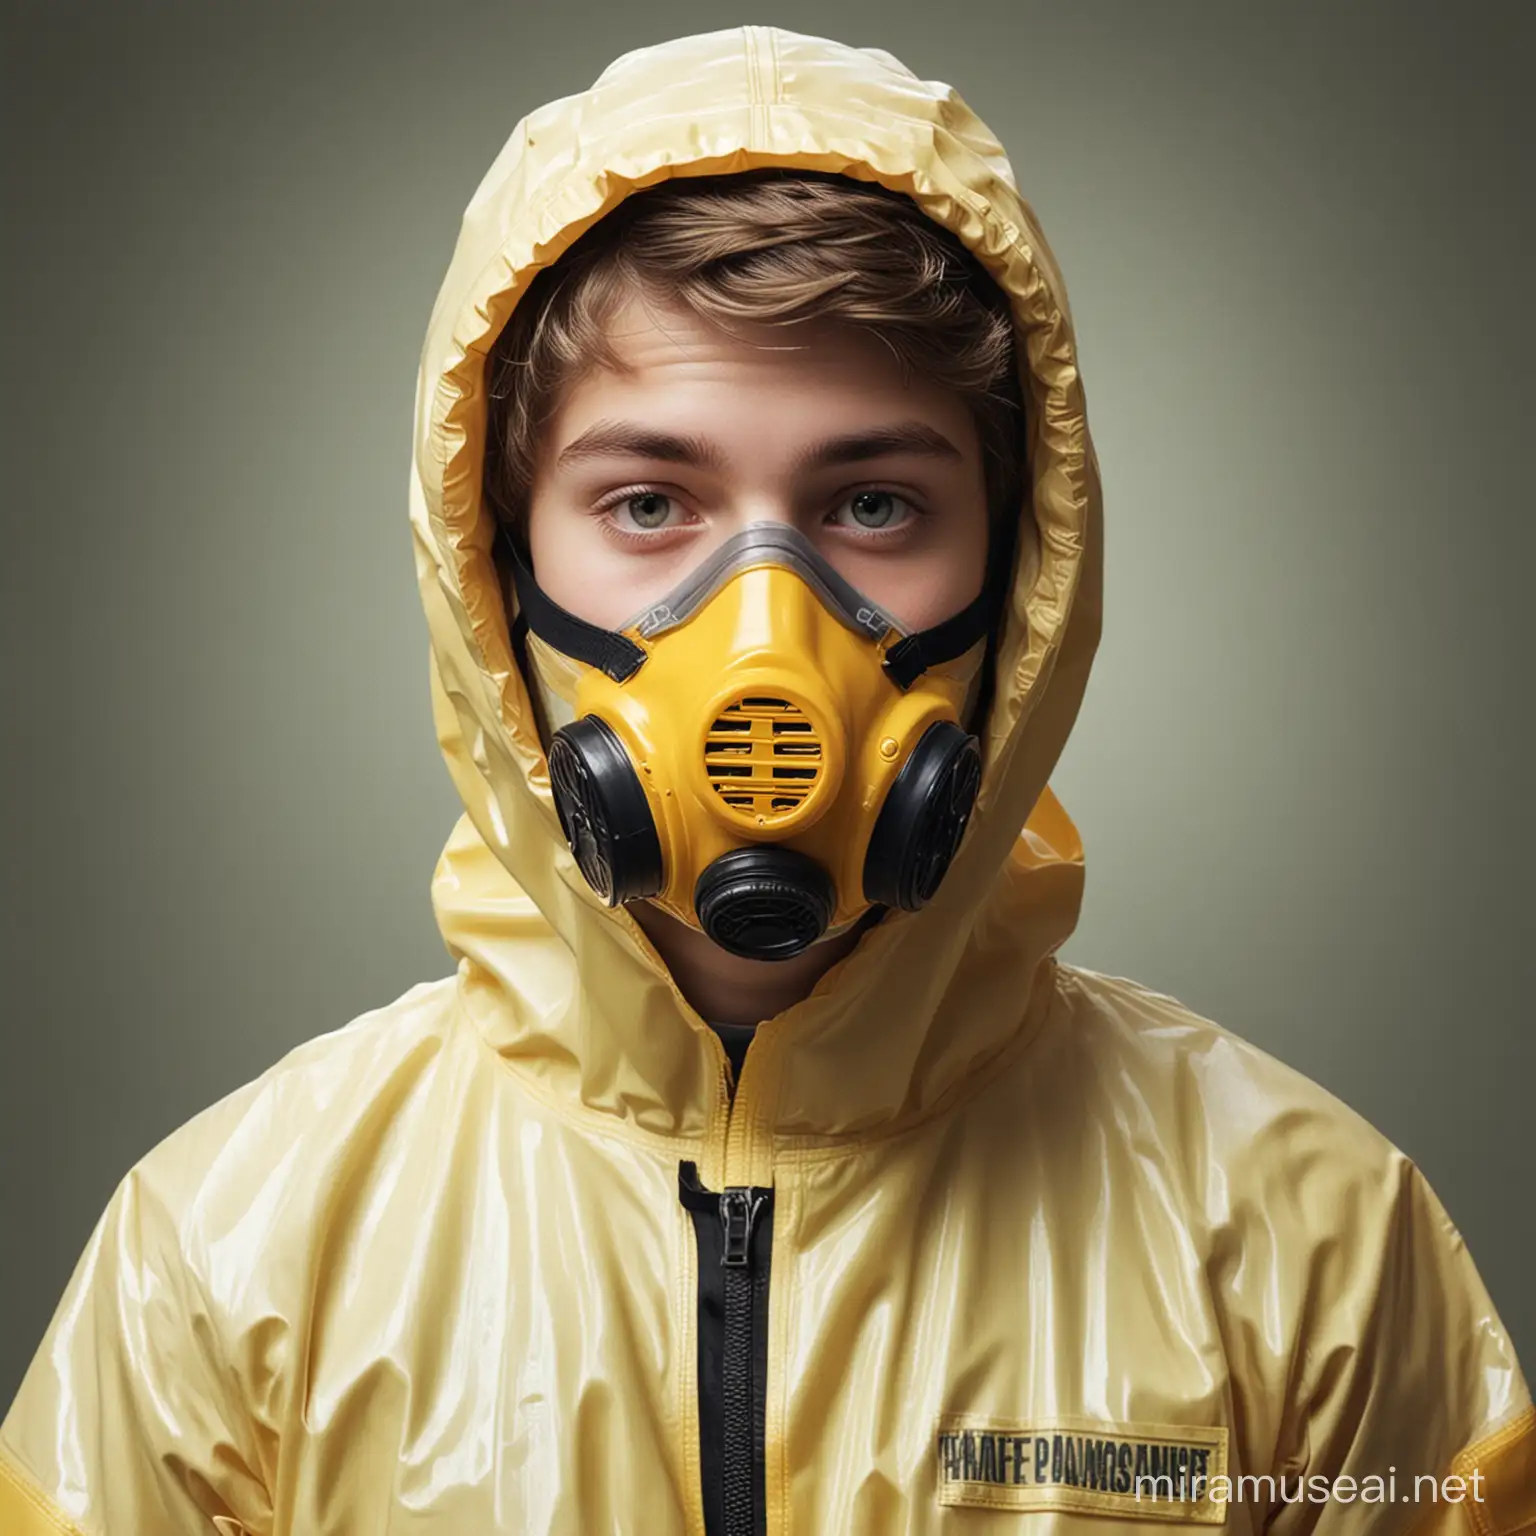 Teen Boy in Hazmat Suit Examining Chemical Experiment